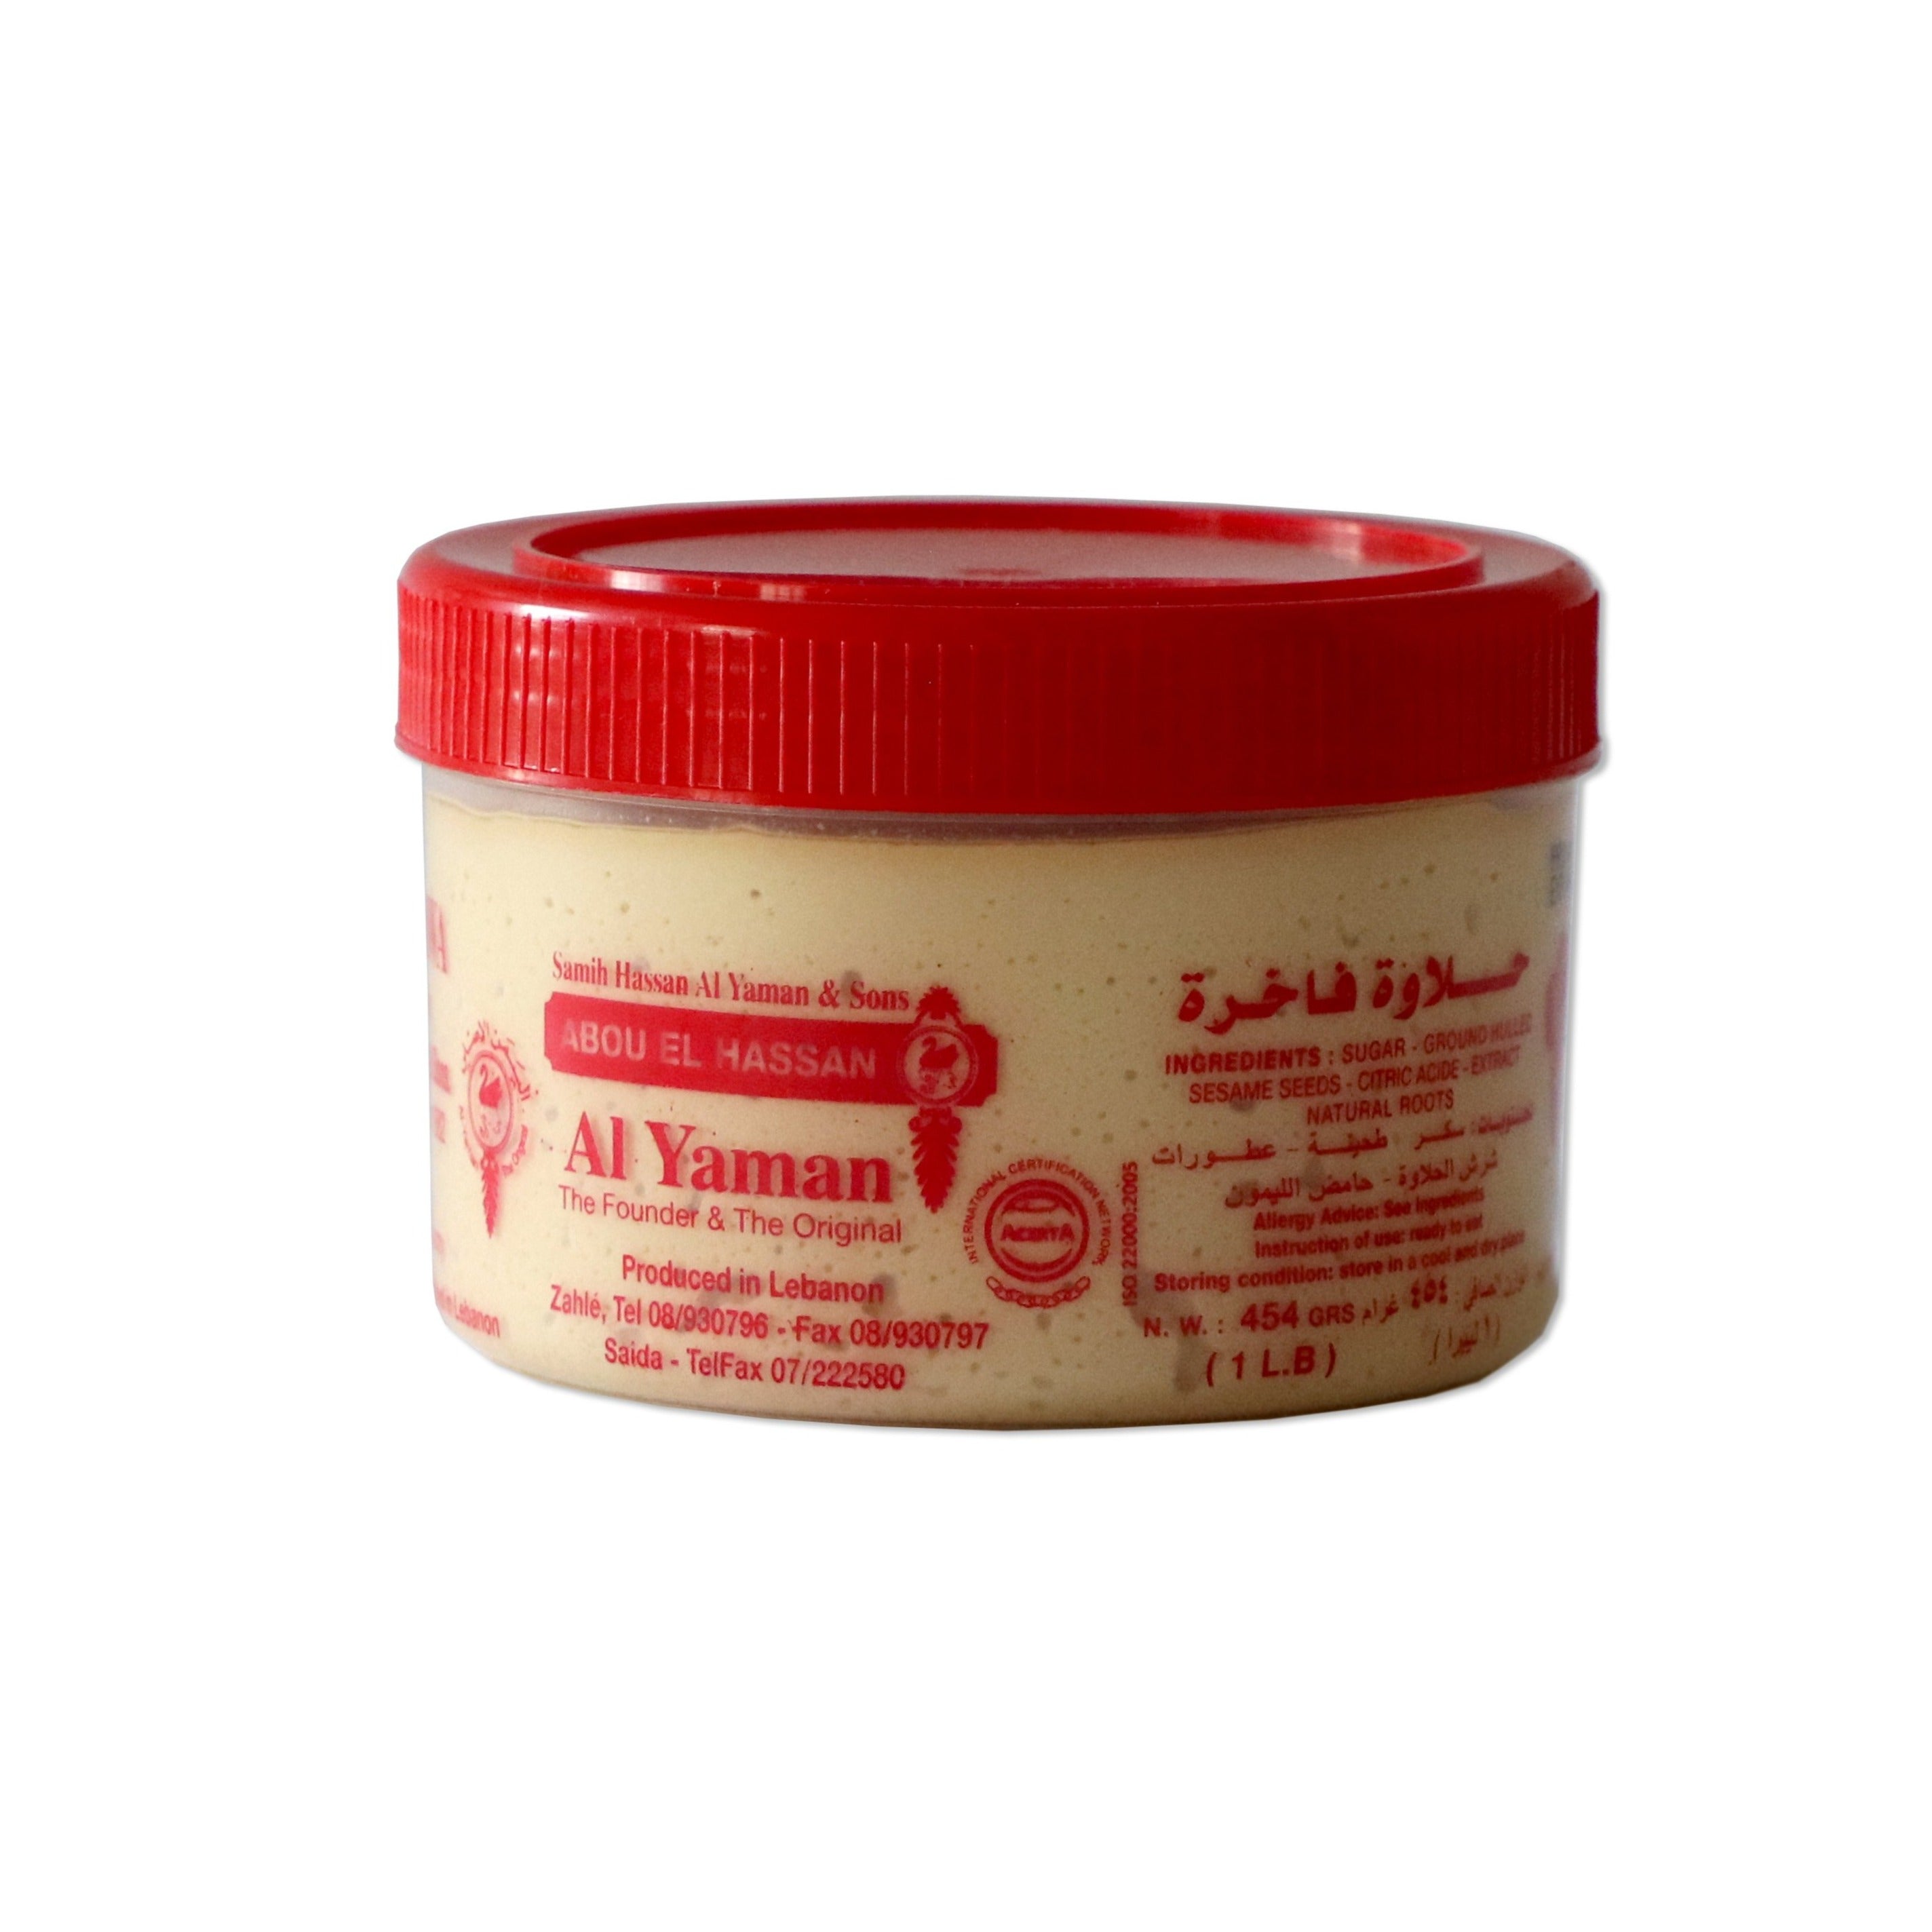 Al Yaman Halva - Plain - Honey & Spice